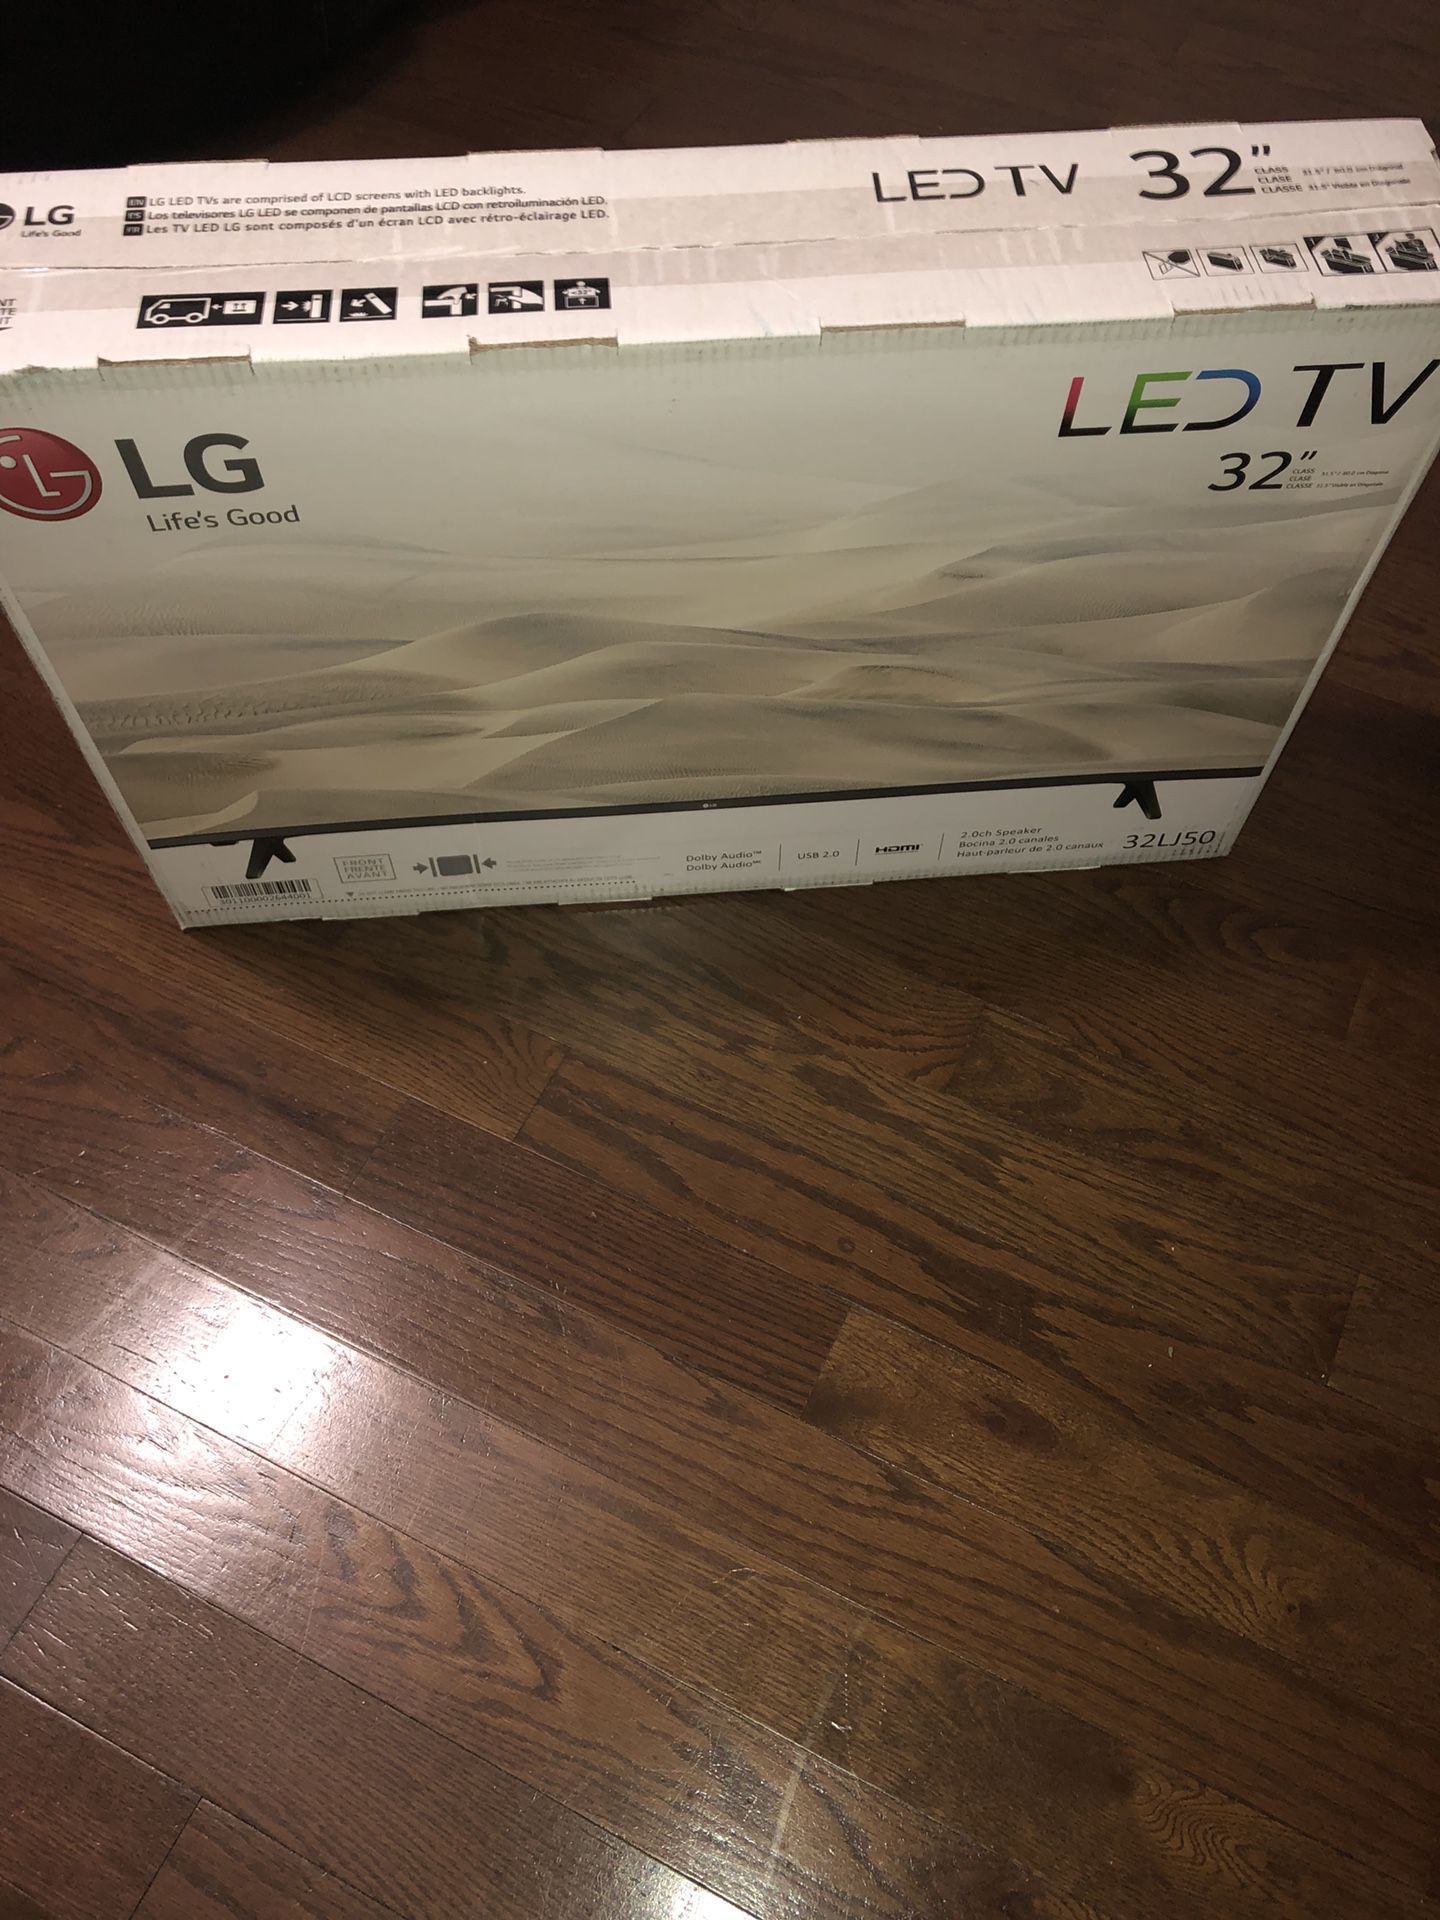 LG LED 32 INCH TV 720 P